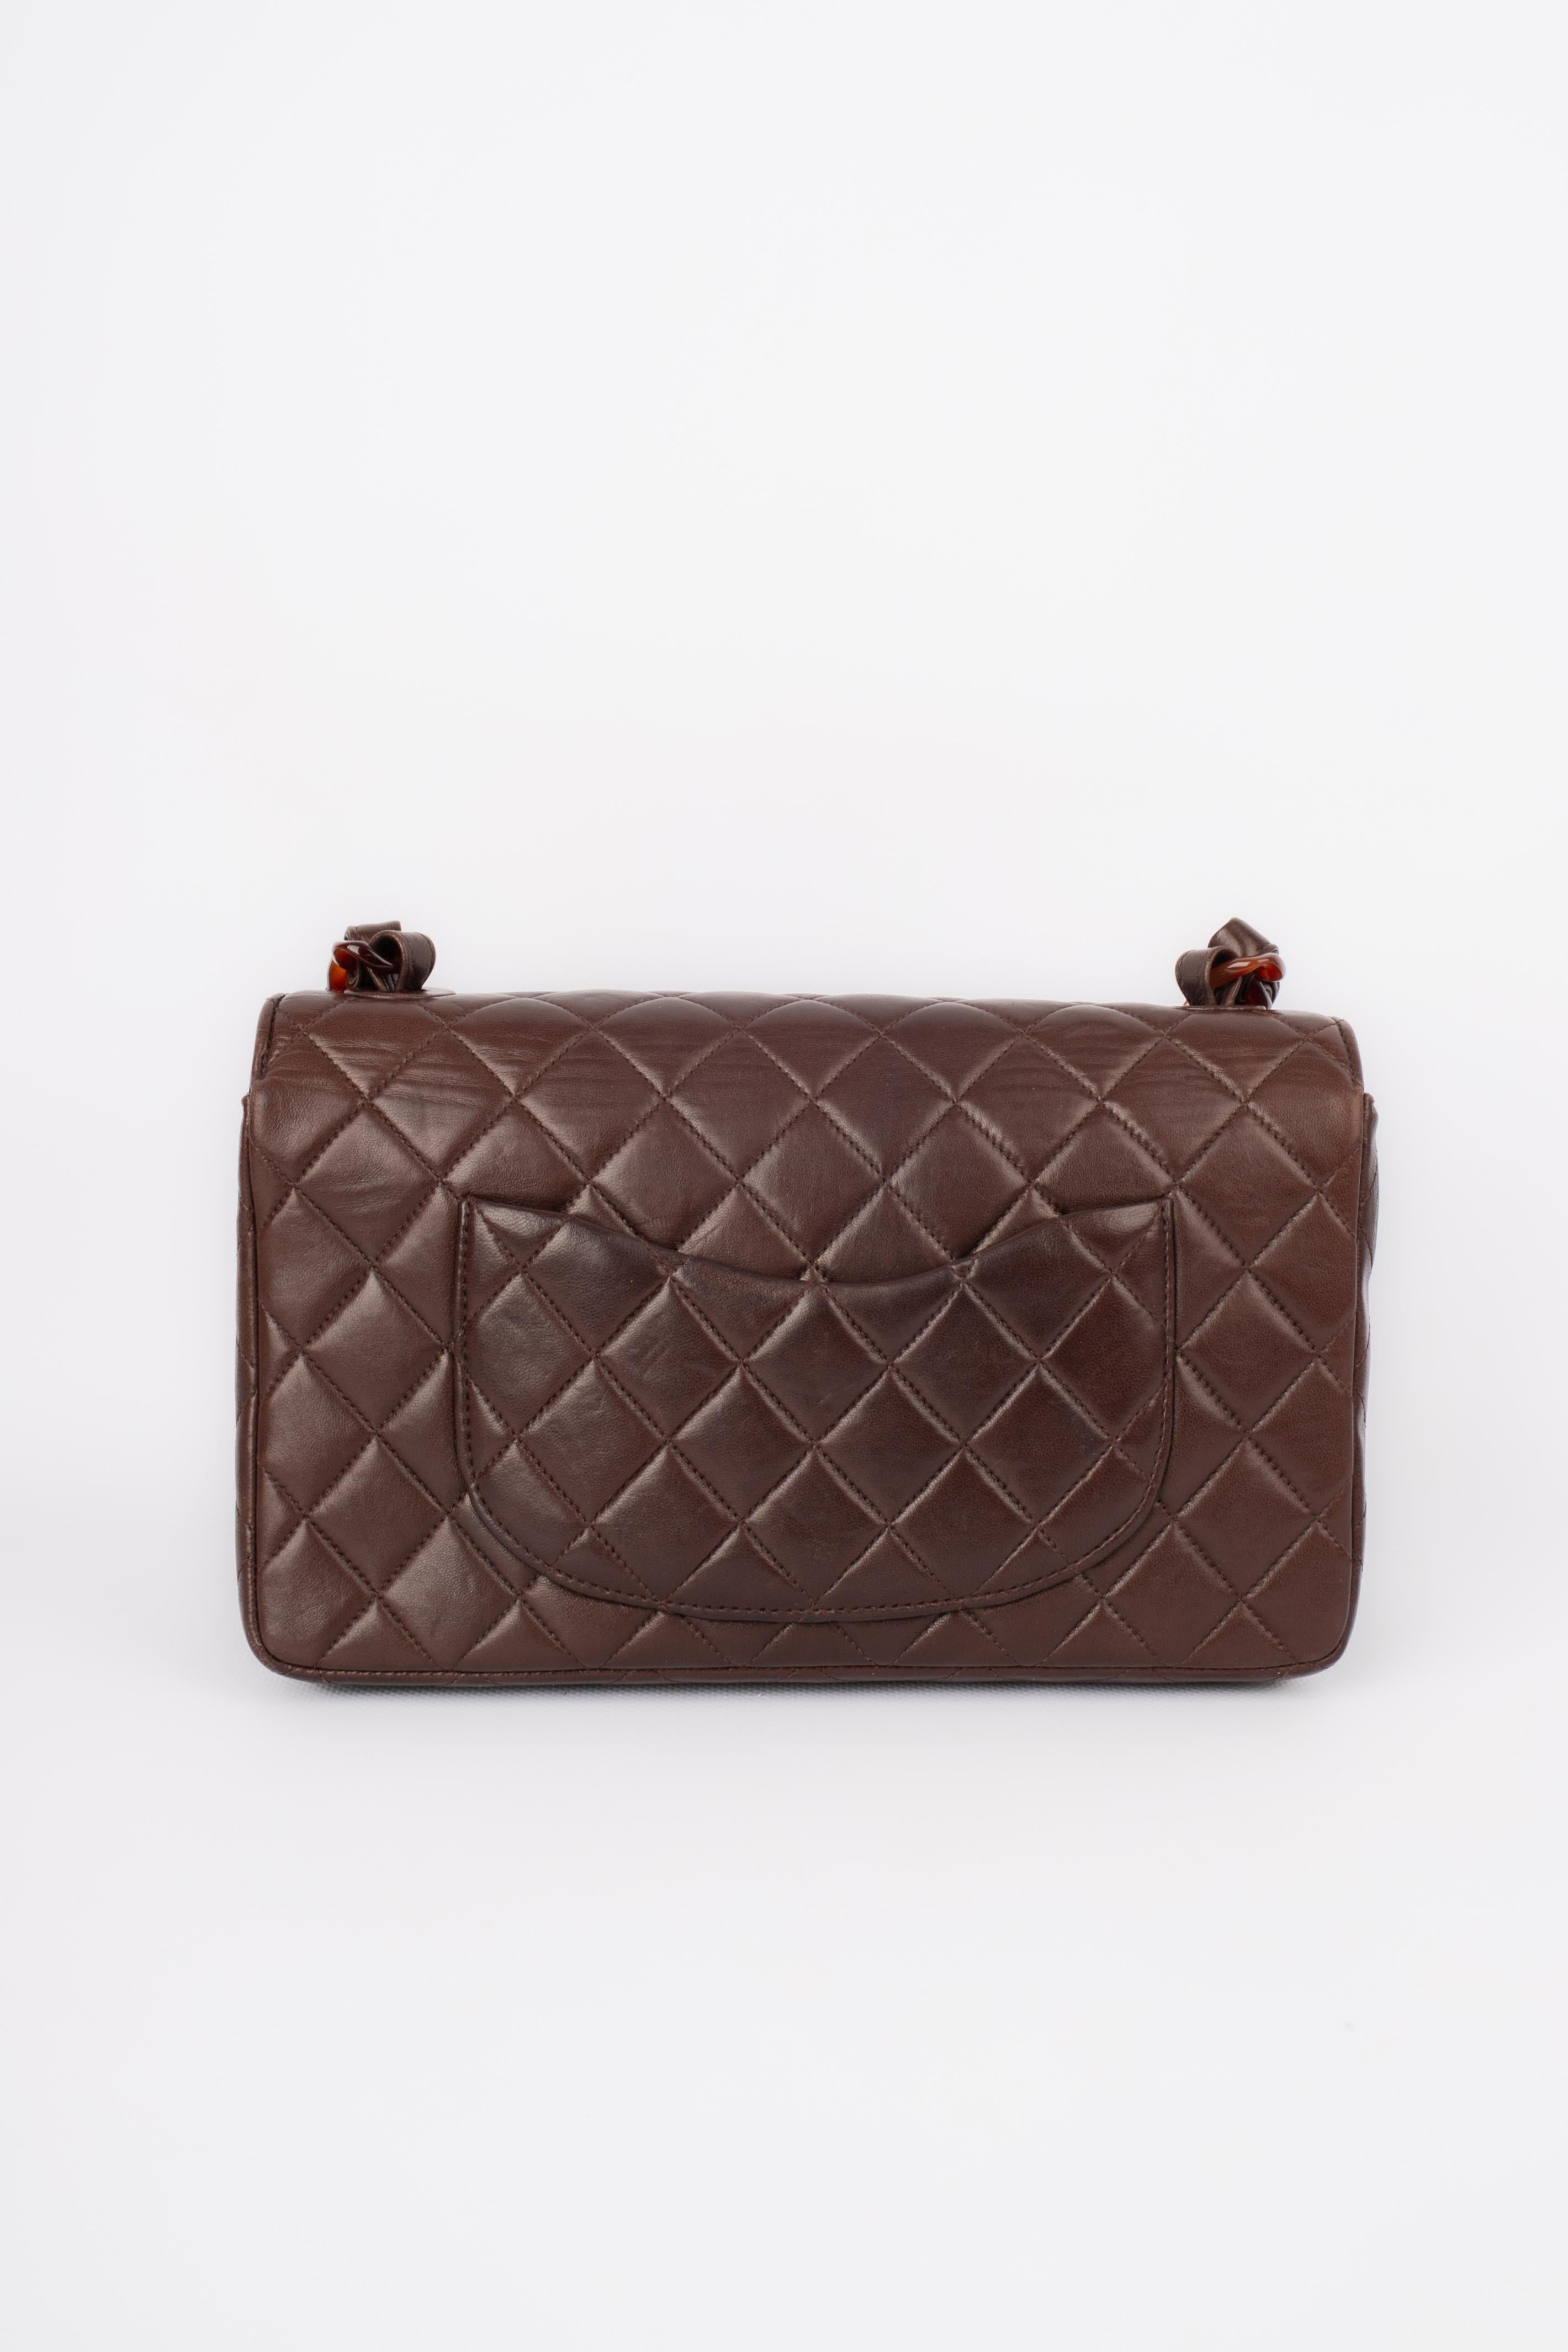 Chanel leather and bakelite bag 1